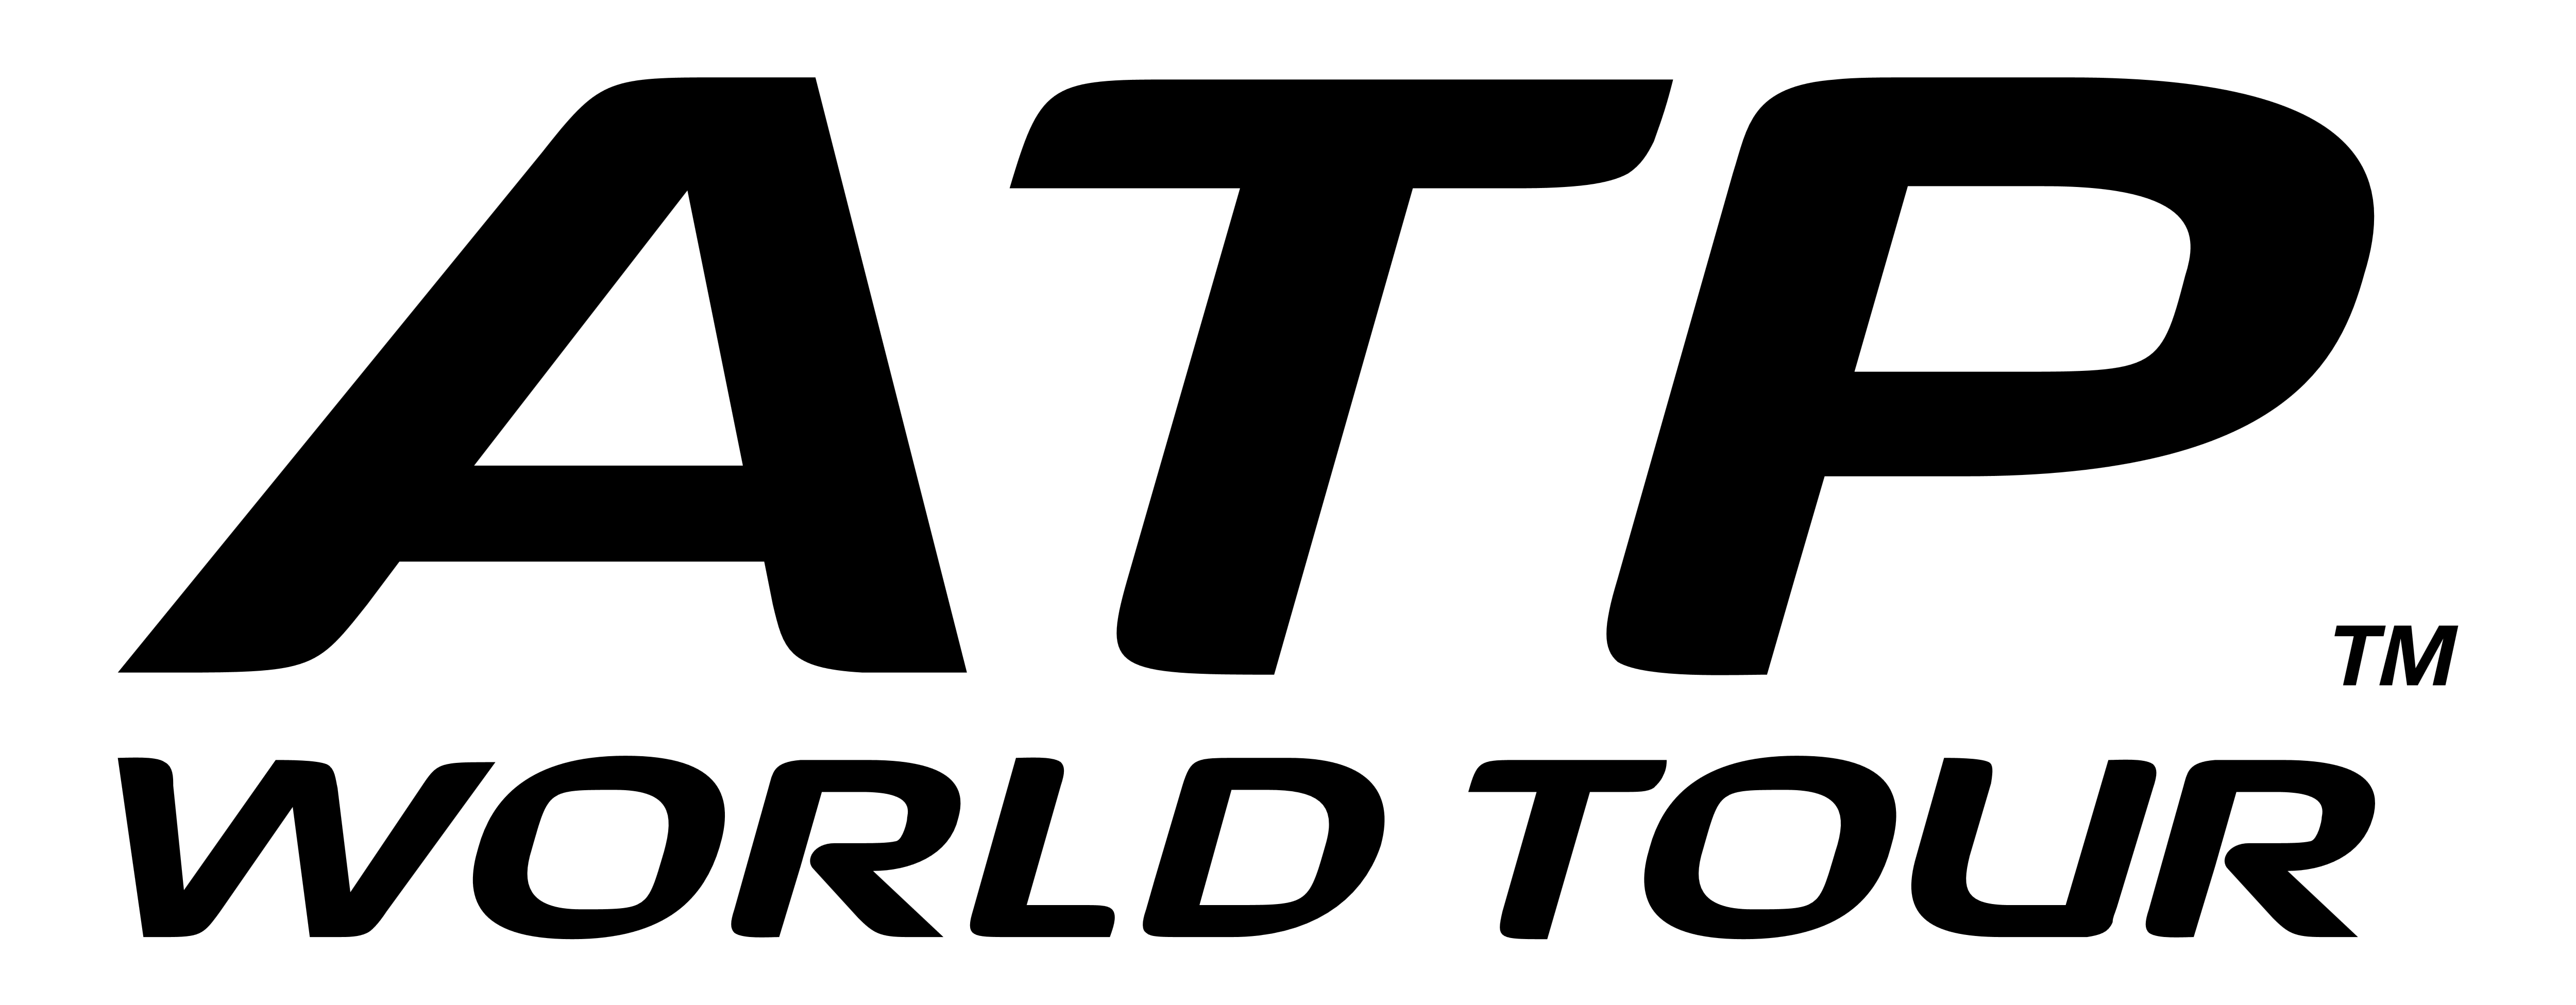 Atp Logo Vector PNG - 104861